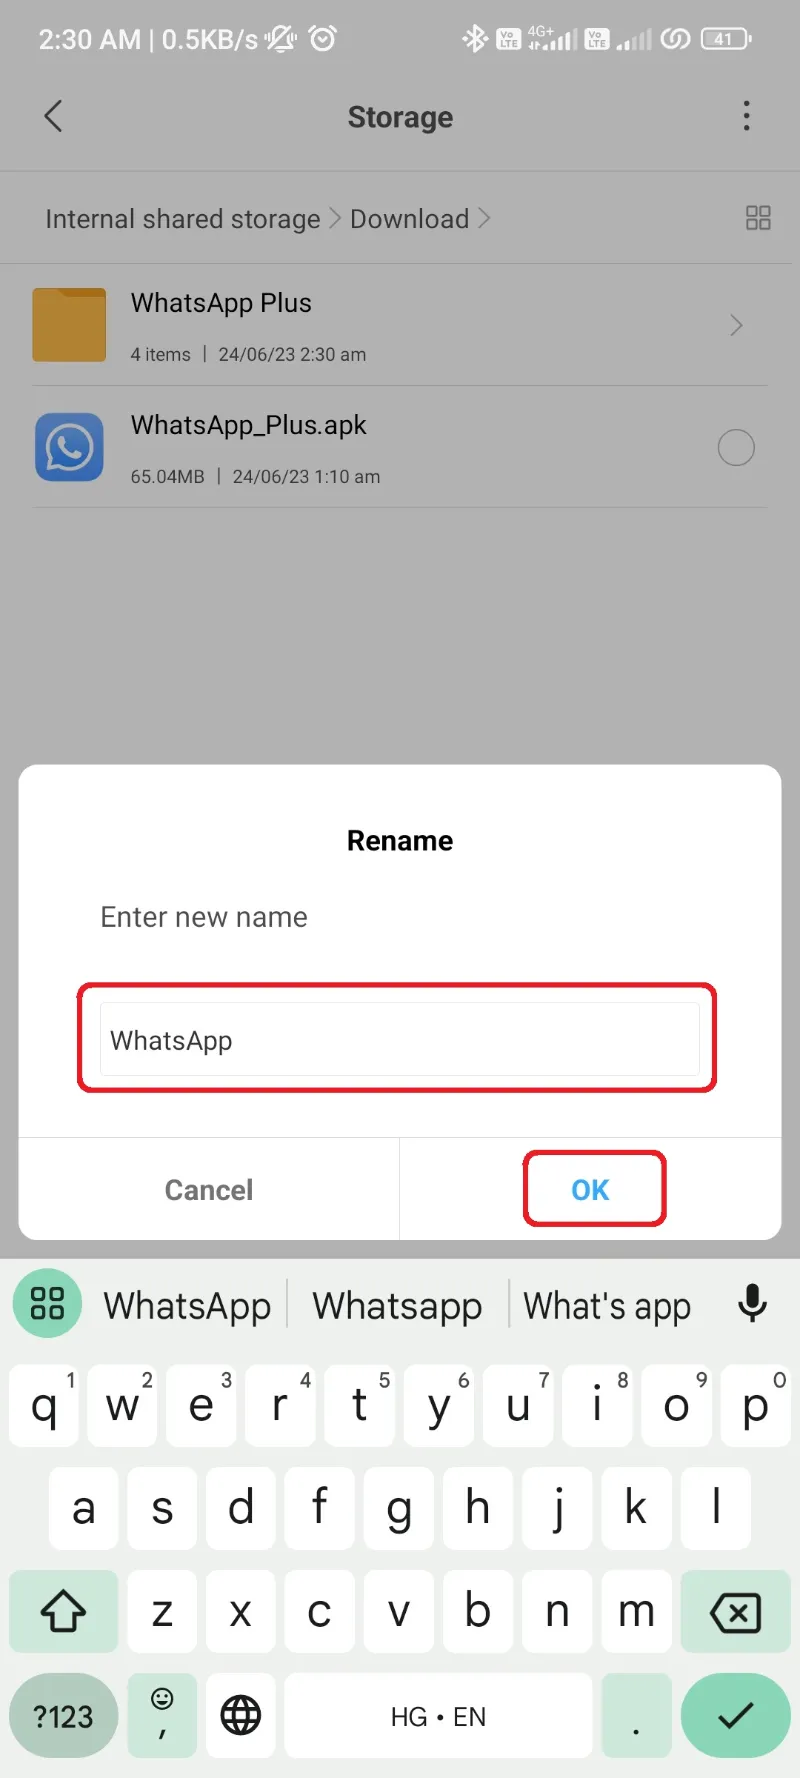 Rename WhatsApp Plus Folder to WhatsApp